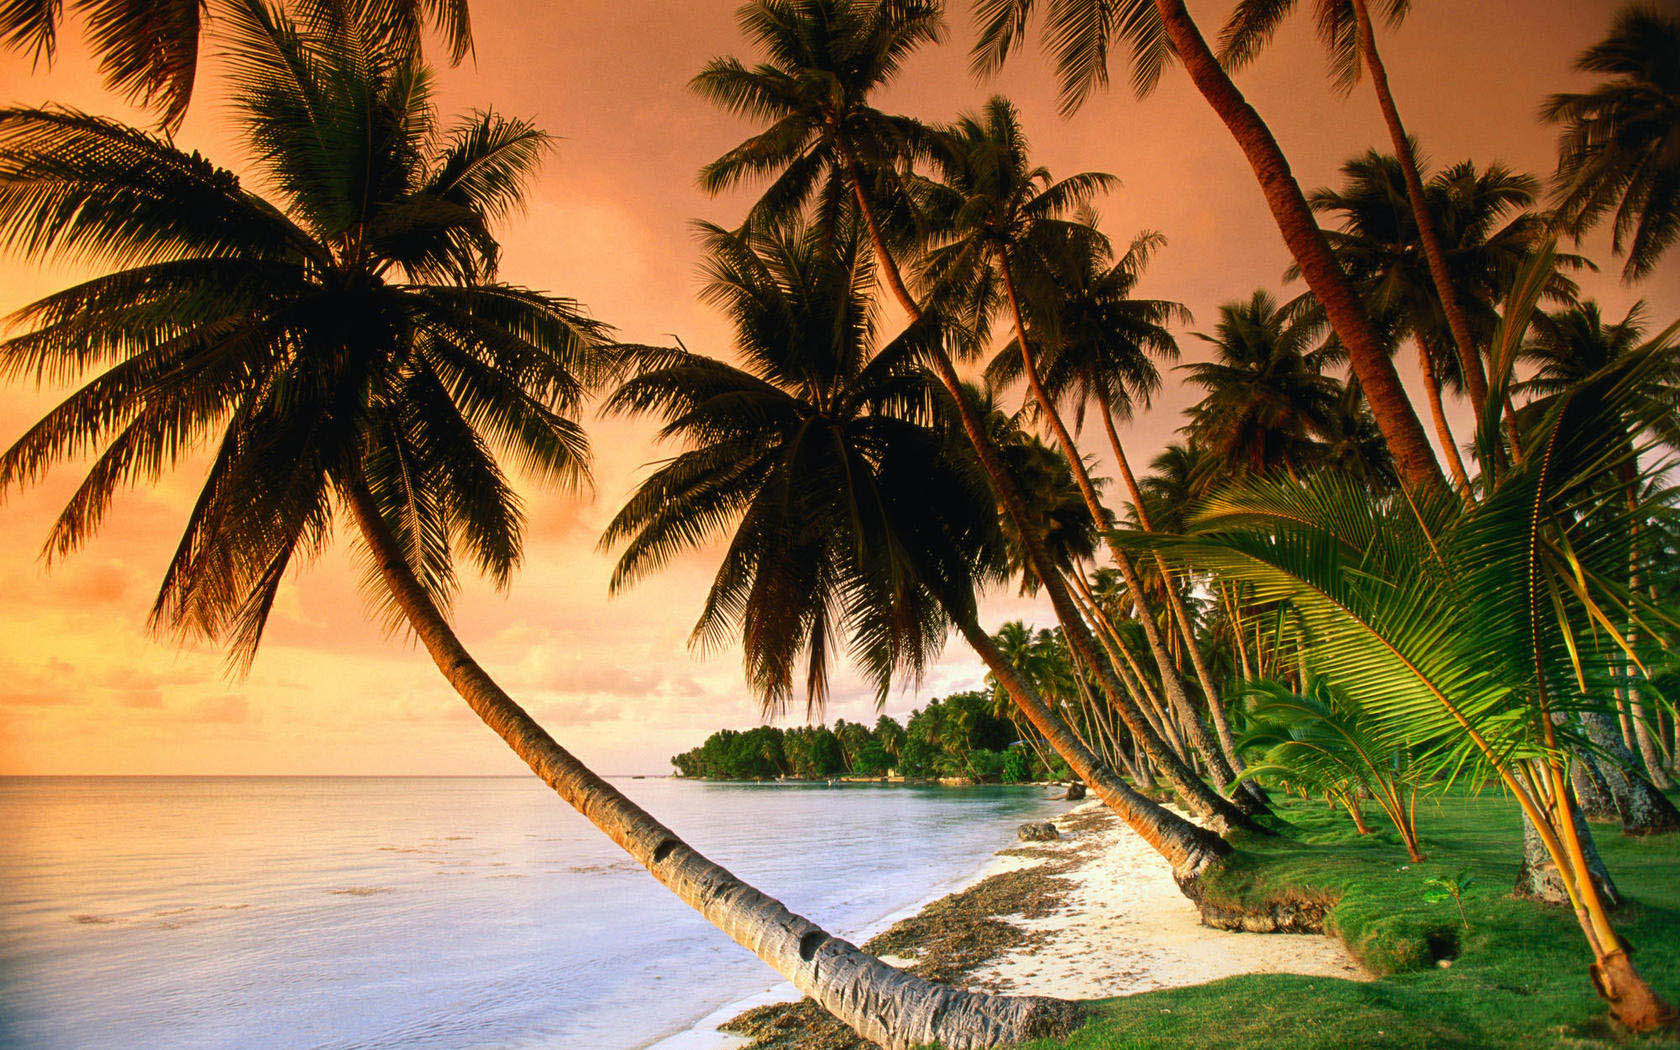 Romantic Seaside Landscape Picture Wallpaper